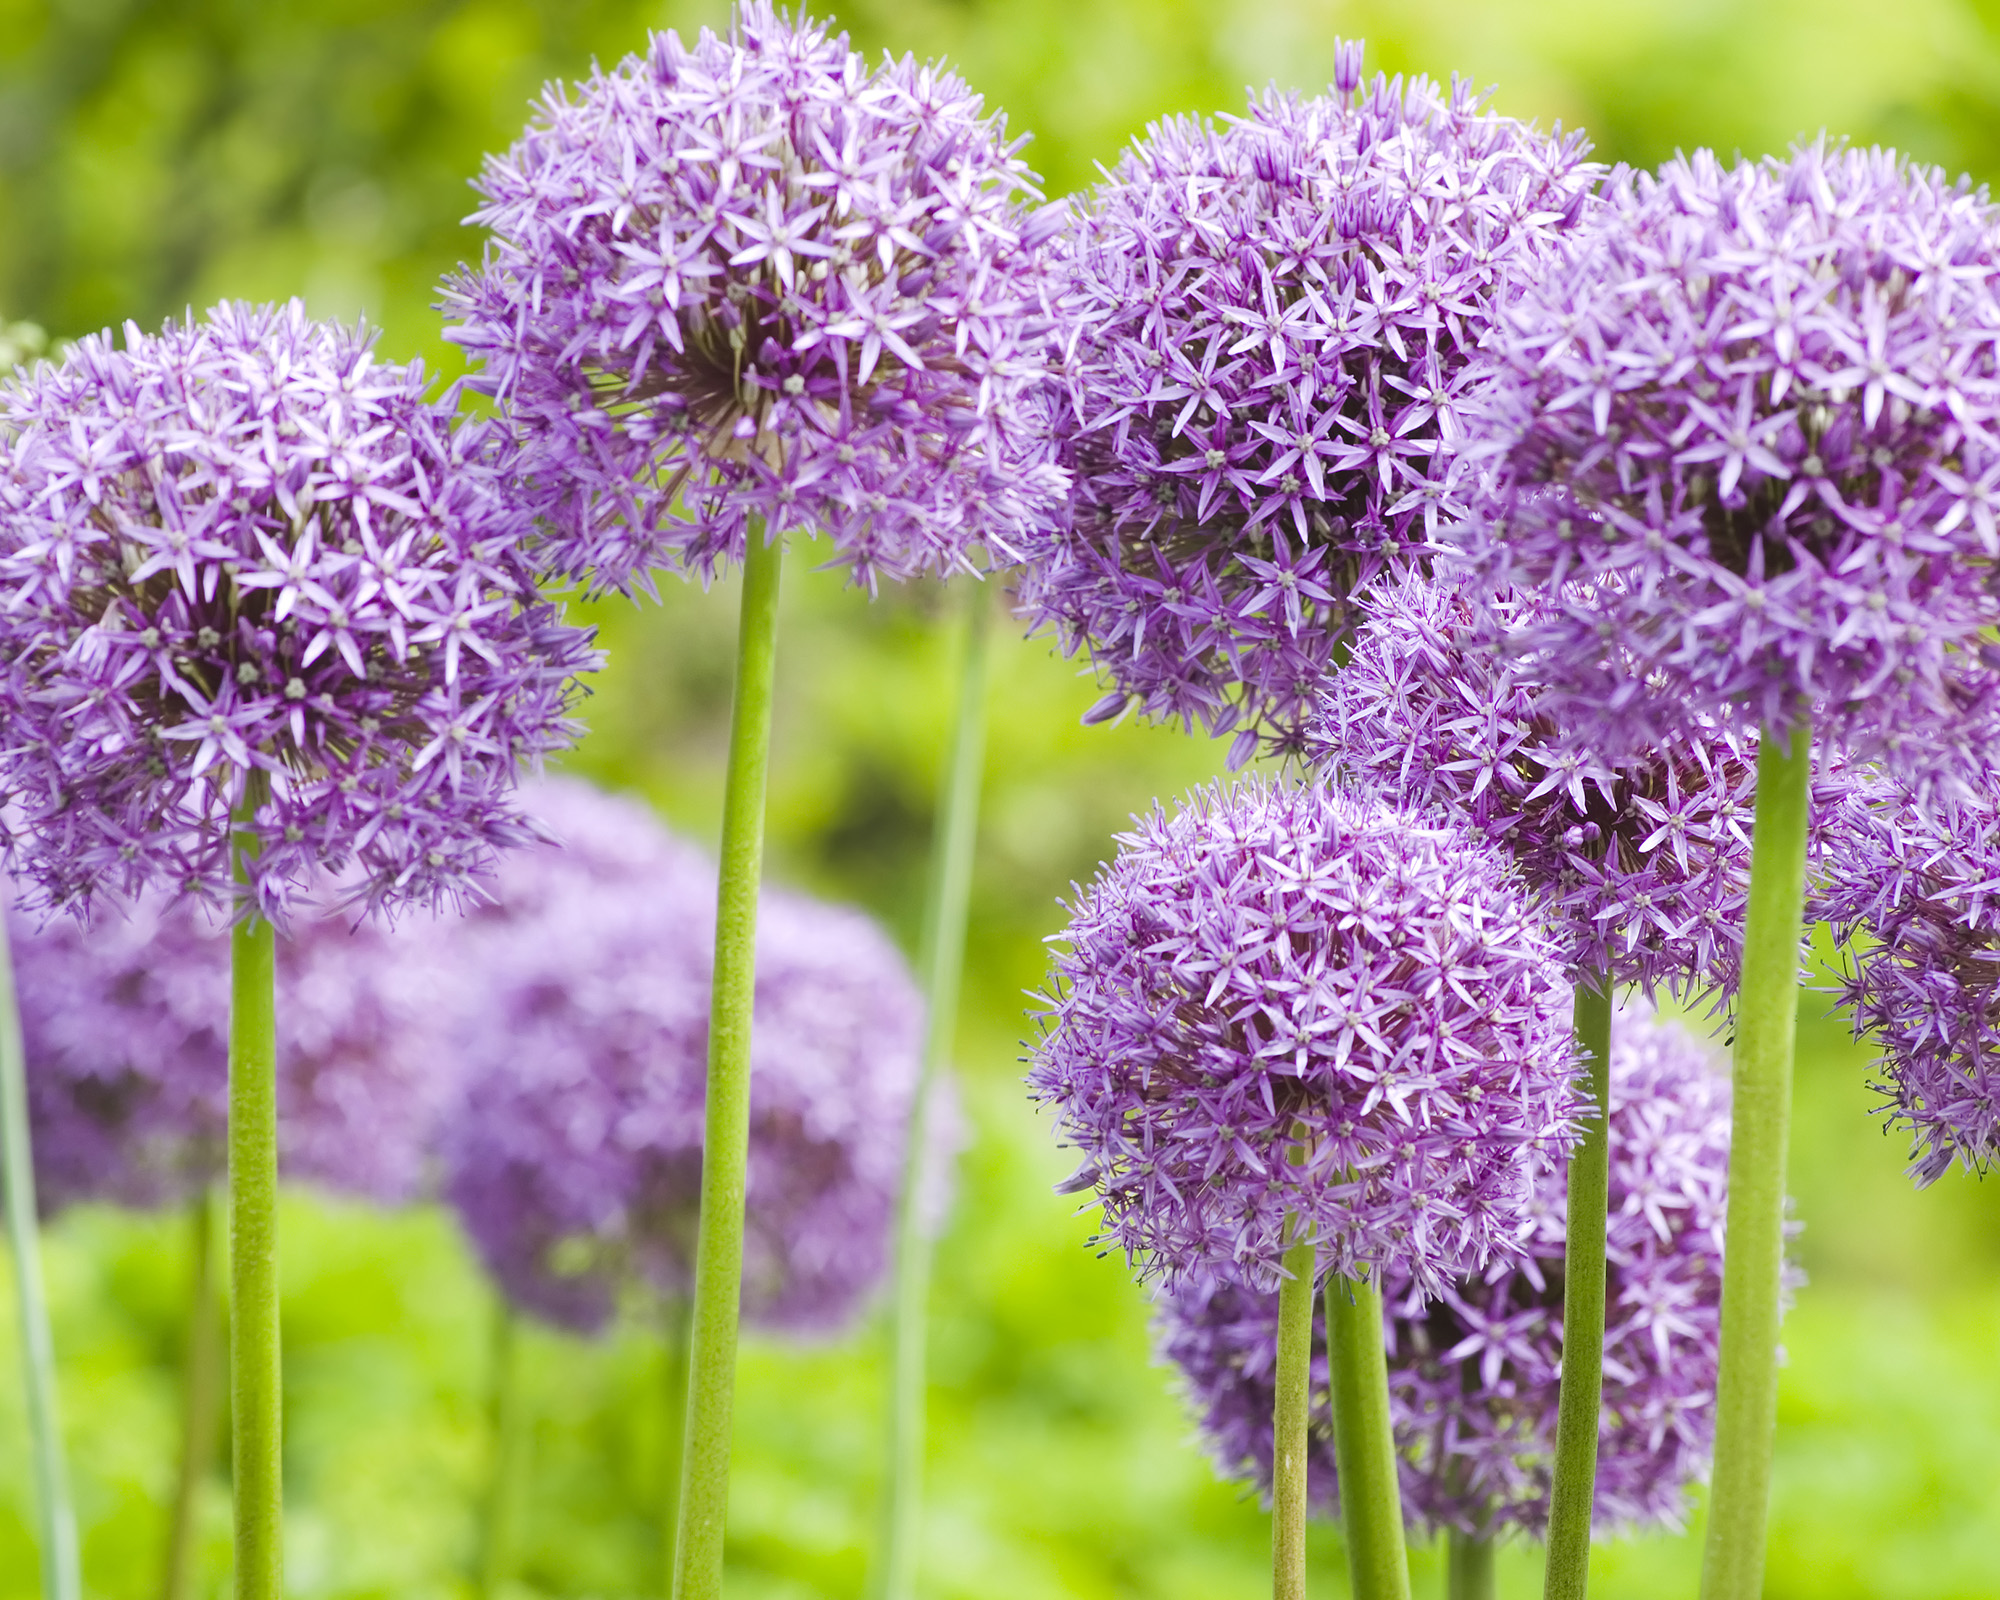 Purple heads of allium flowers